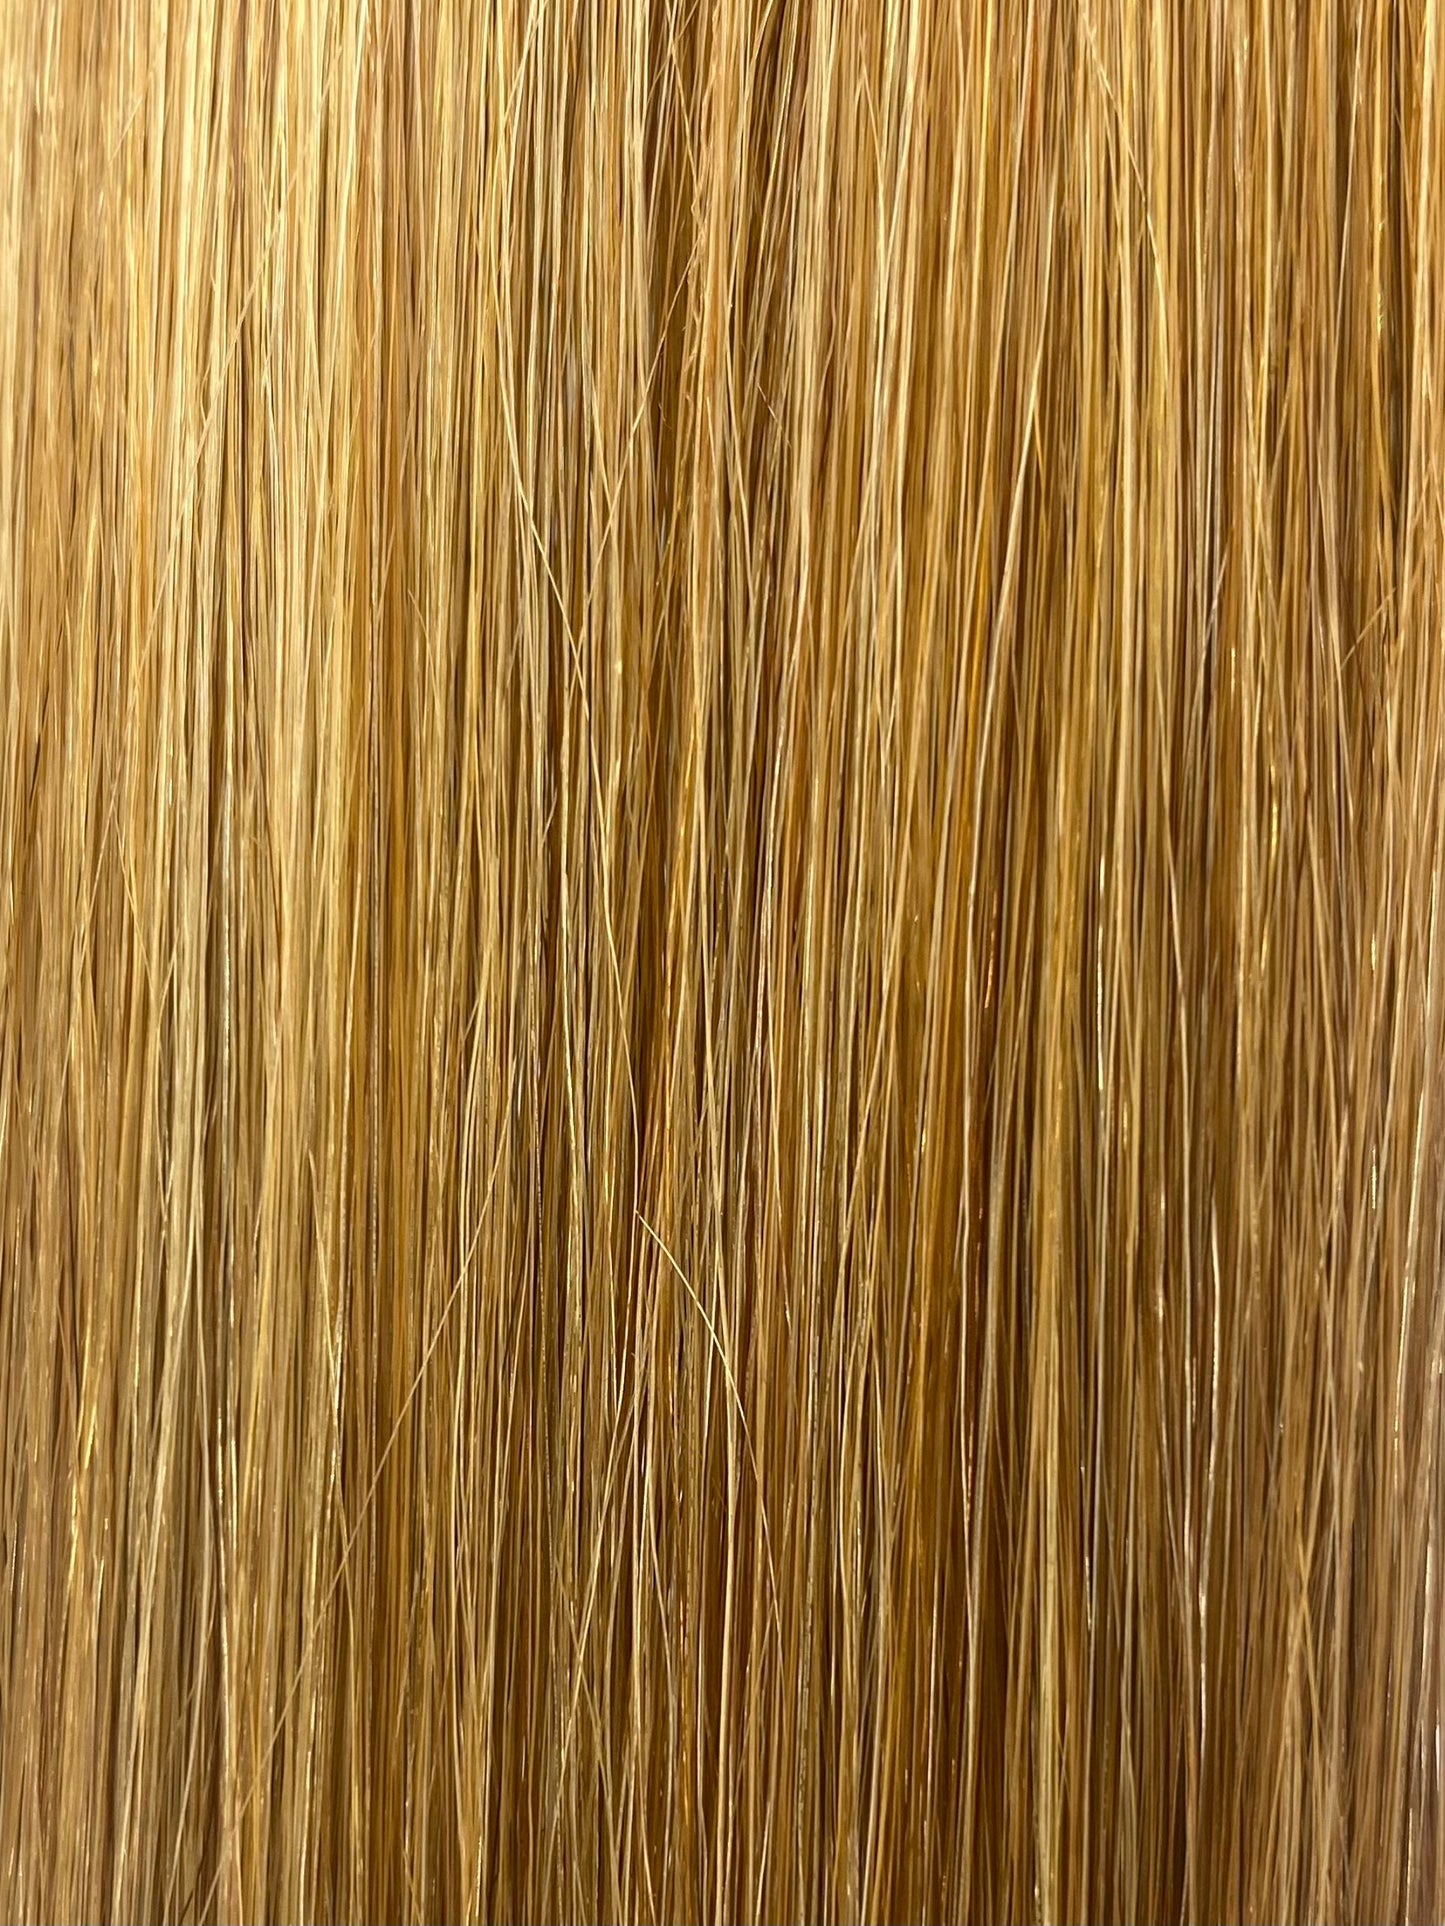 Fusion hair extensions #27/140 - 40cm/16 inches - Golden Blonde/Golden Ultra Blonde Highlight Fusion Euro So Cap 